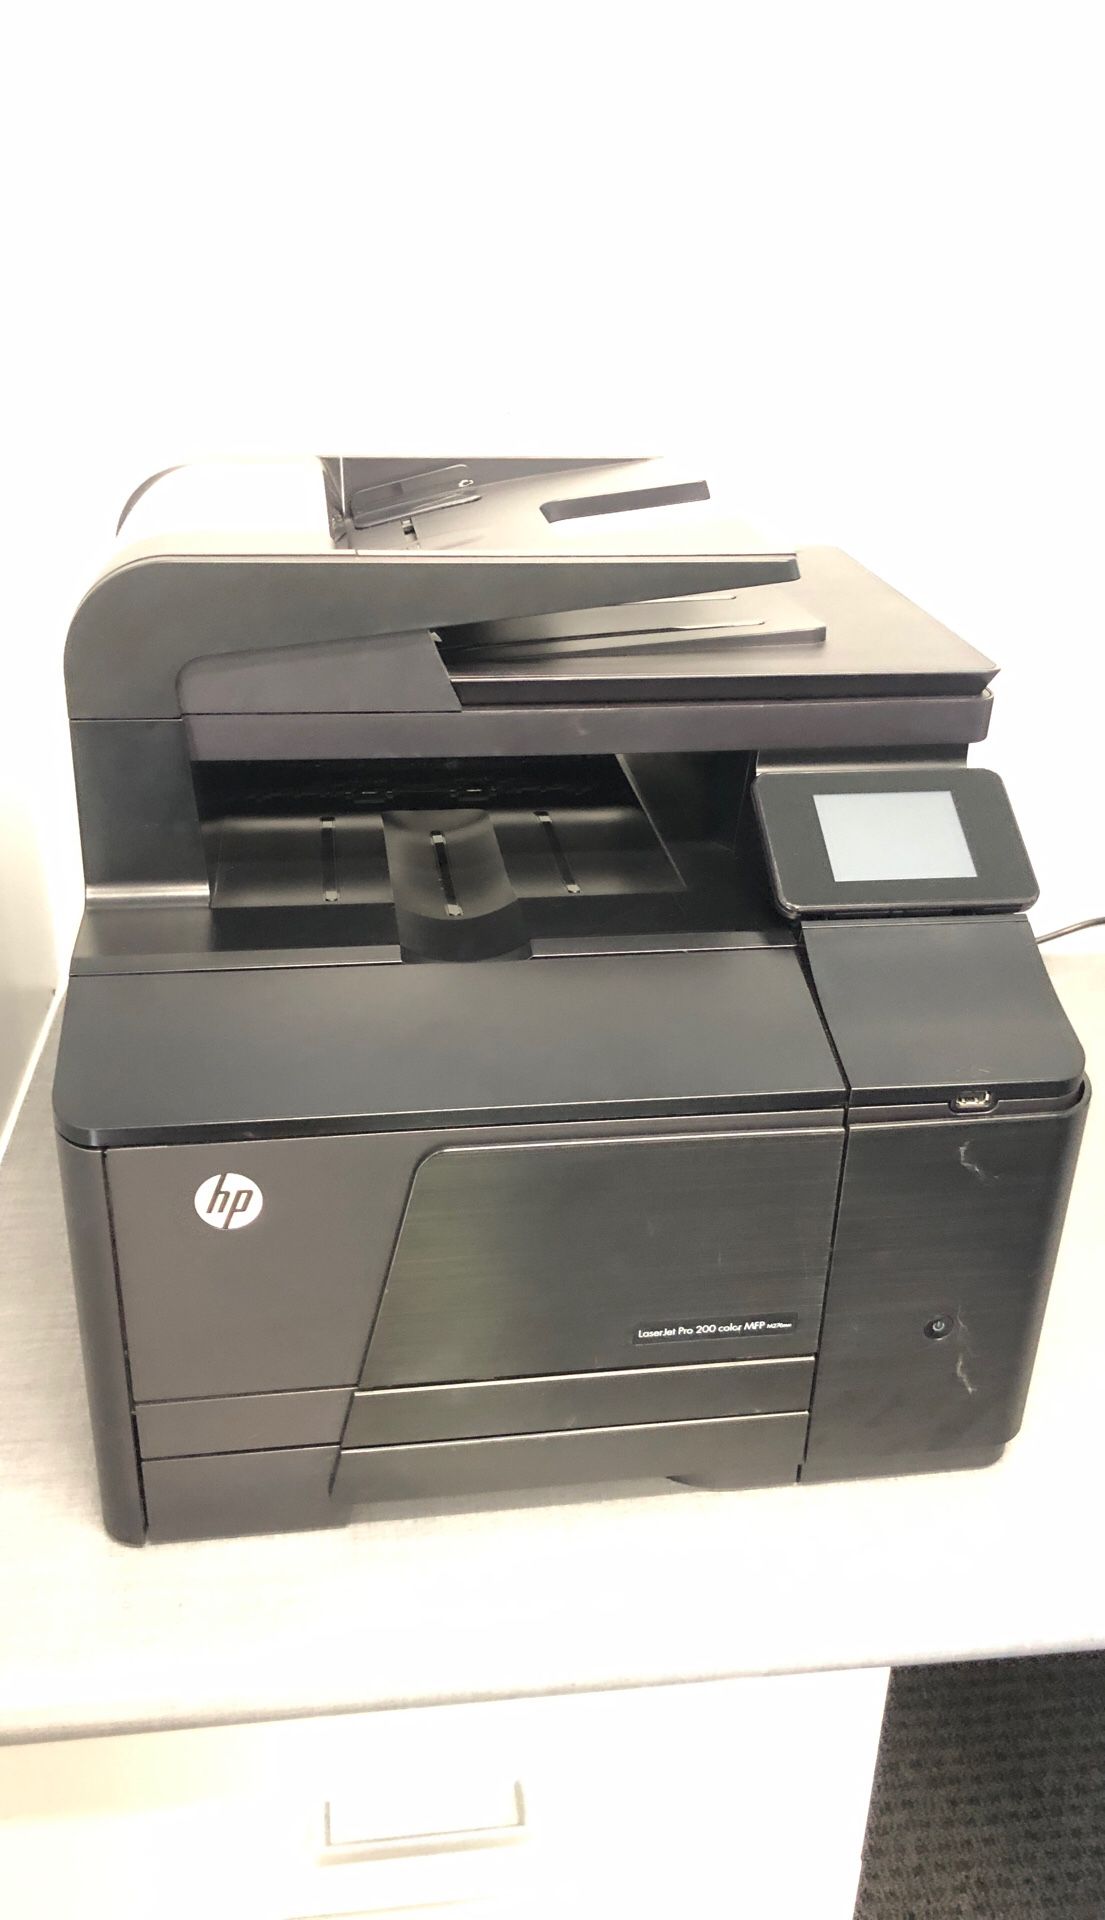 Printer scanner